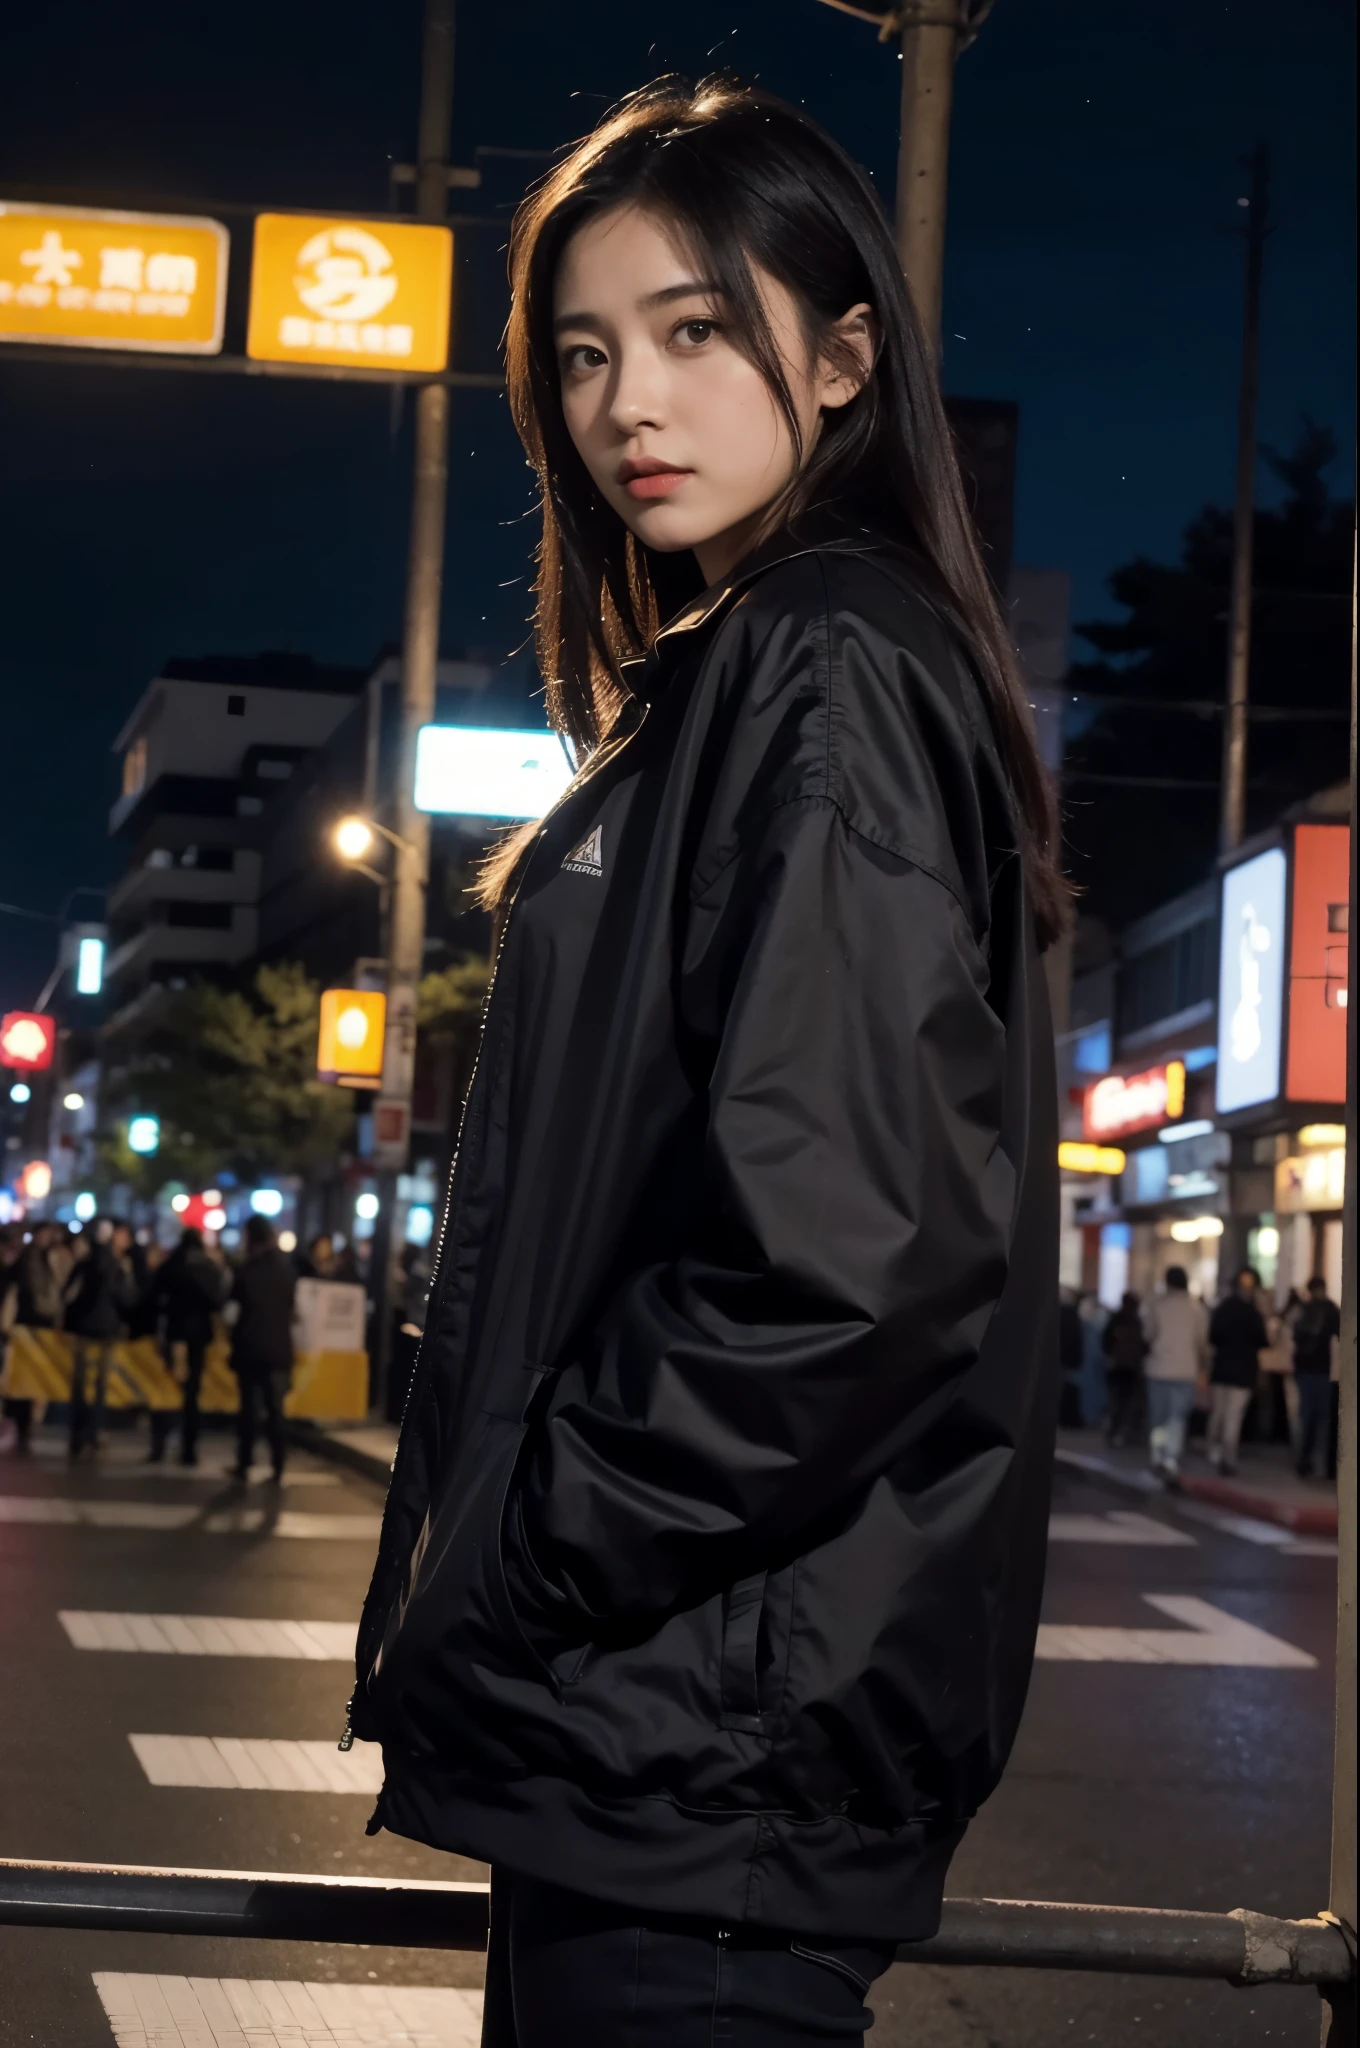 1 girl, tokyo street,evening, urban landscape,city Lights, Upper part of the body,close up, 8k, raw photo, Best Quality, masterpiece,realist, photo-realist,